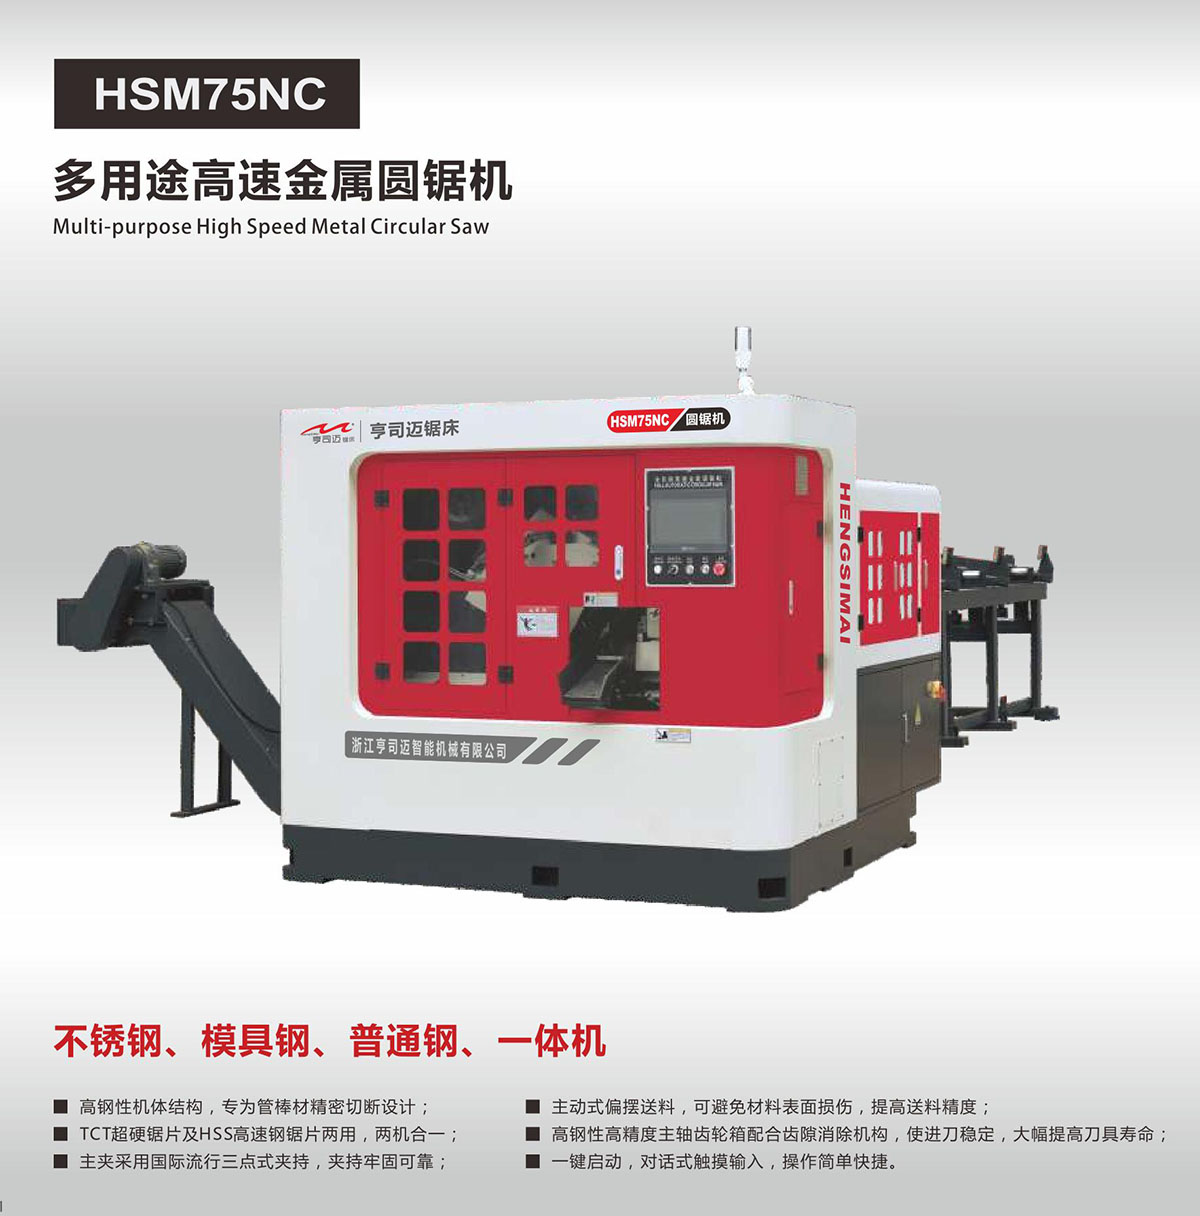 HSM75NC（多用途高速金属圆锯机）